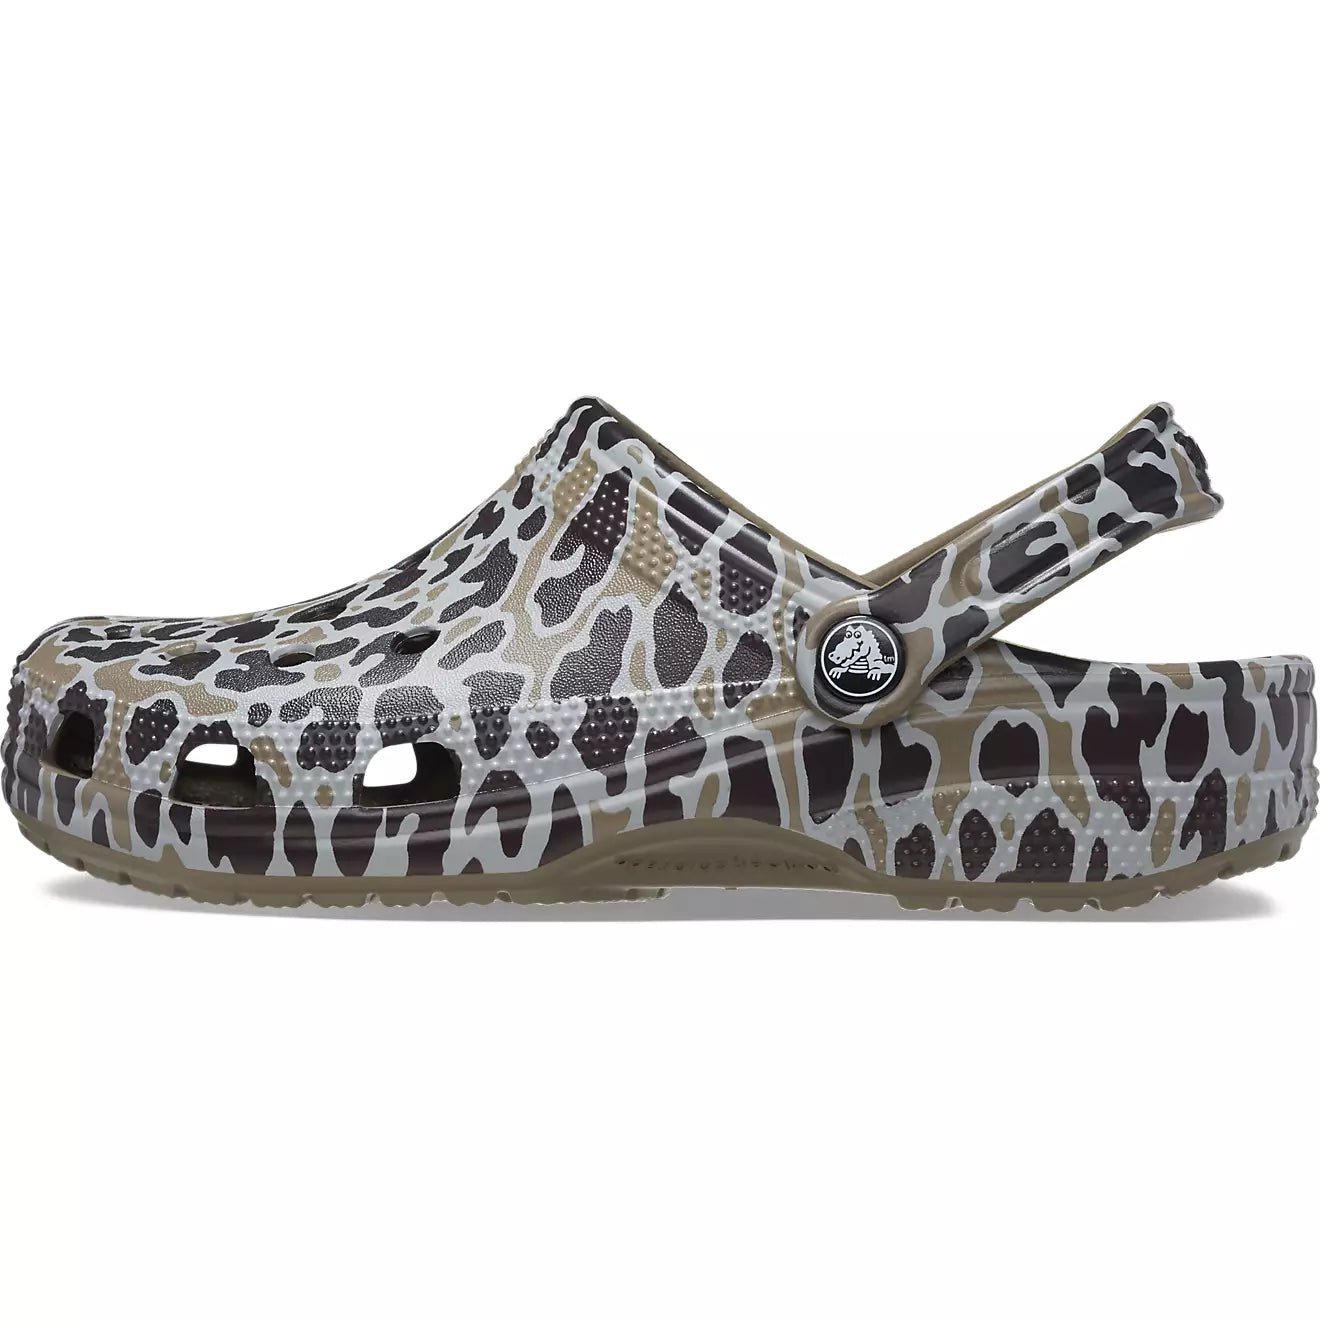 Crocs Women's Classic Animal Print Clog - Khaki/Leopard